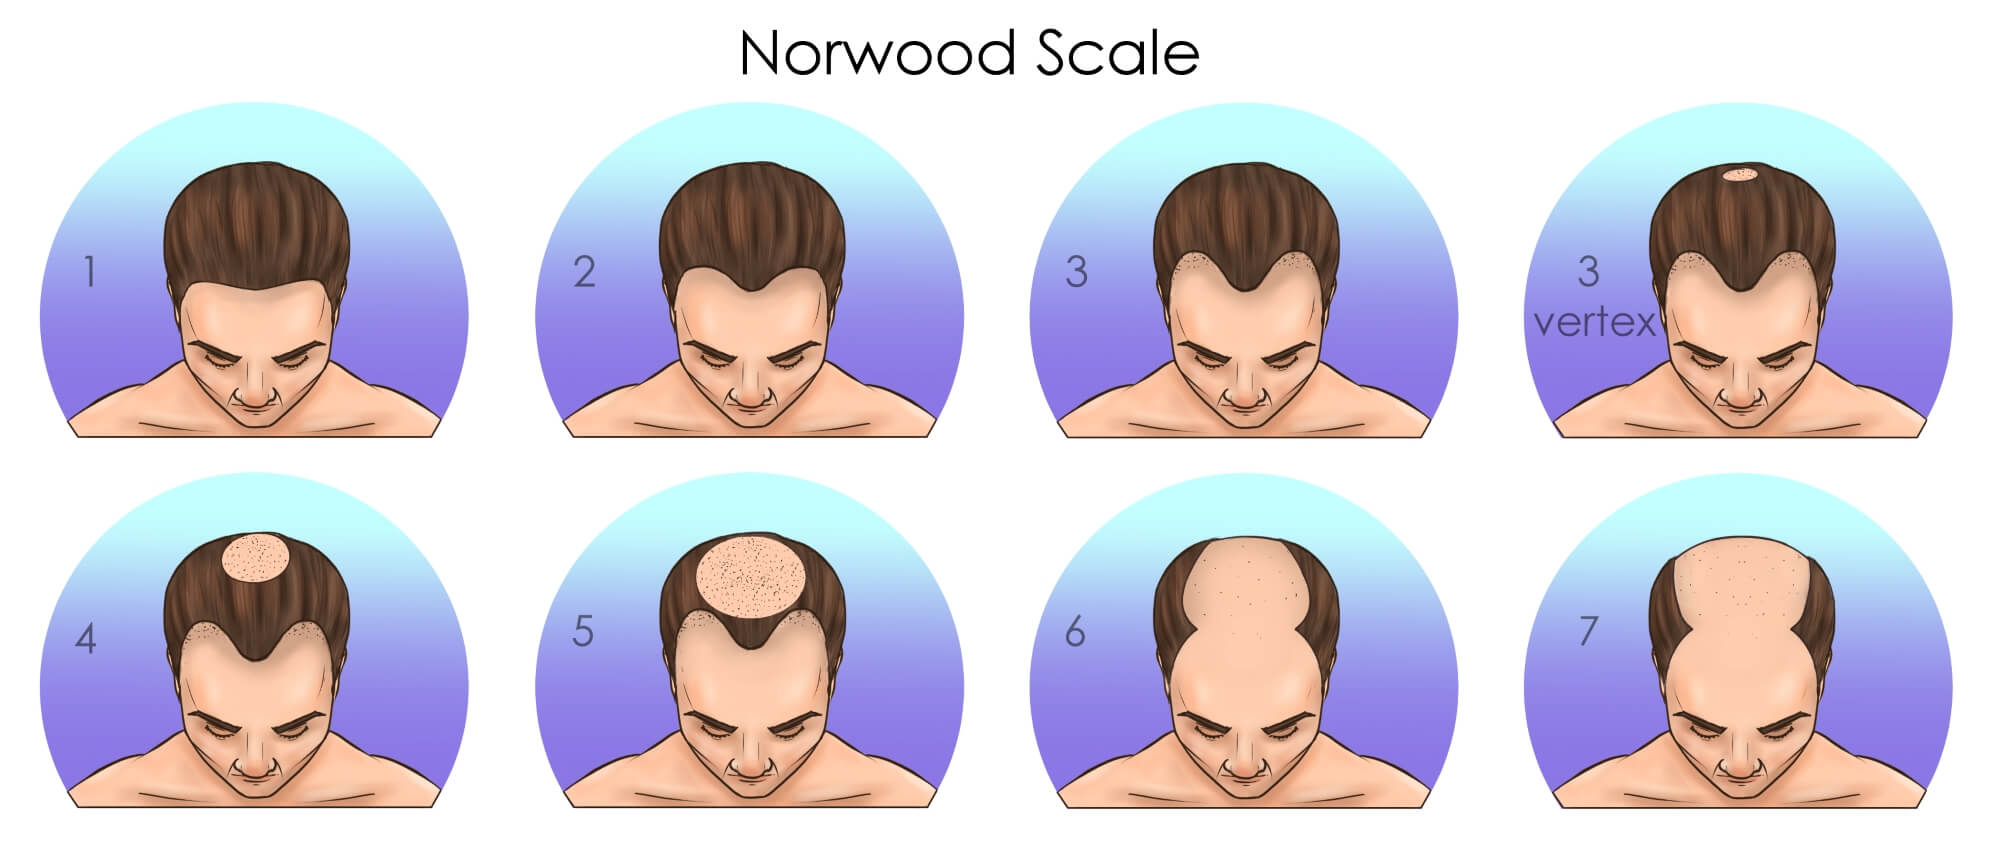 How Many Hair Grafts Do I Need? | Norwood Scale Hair Transplant